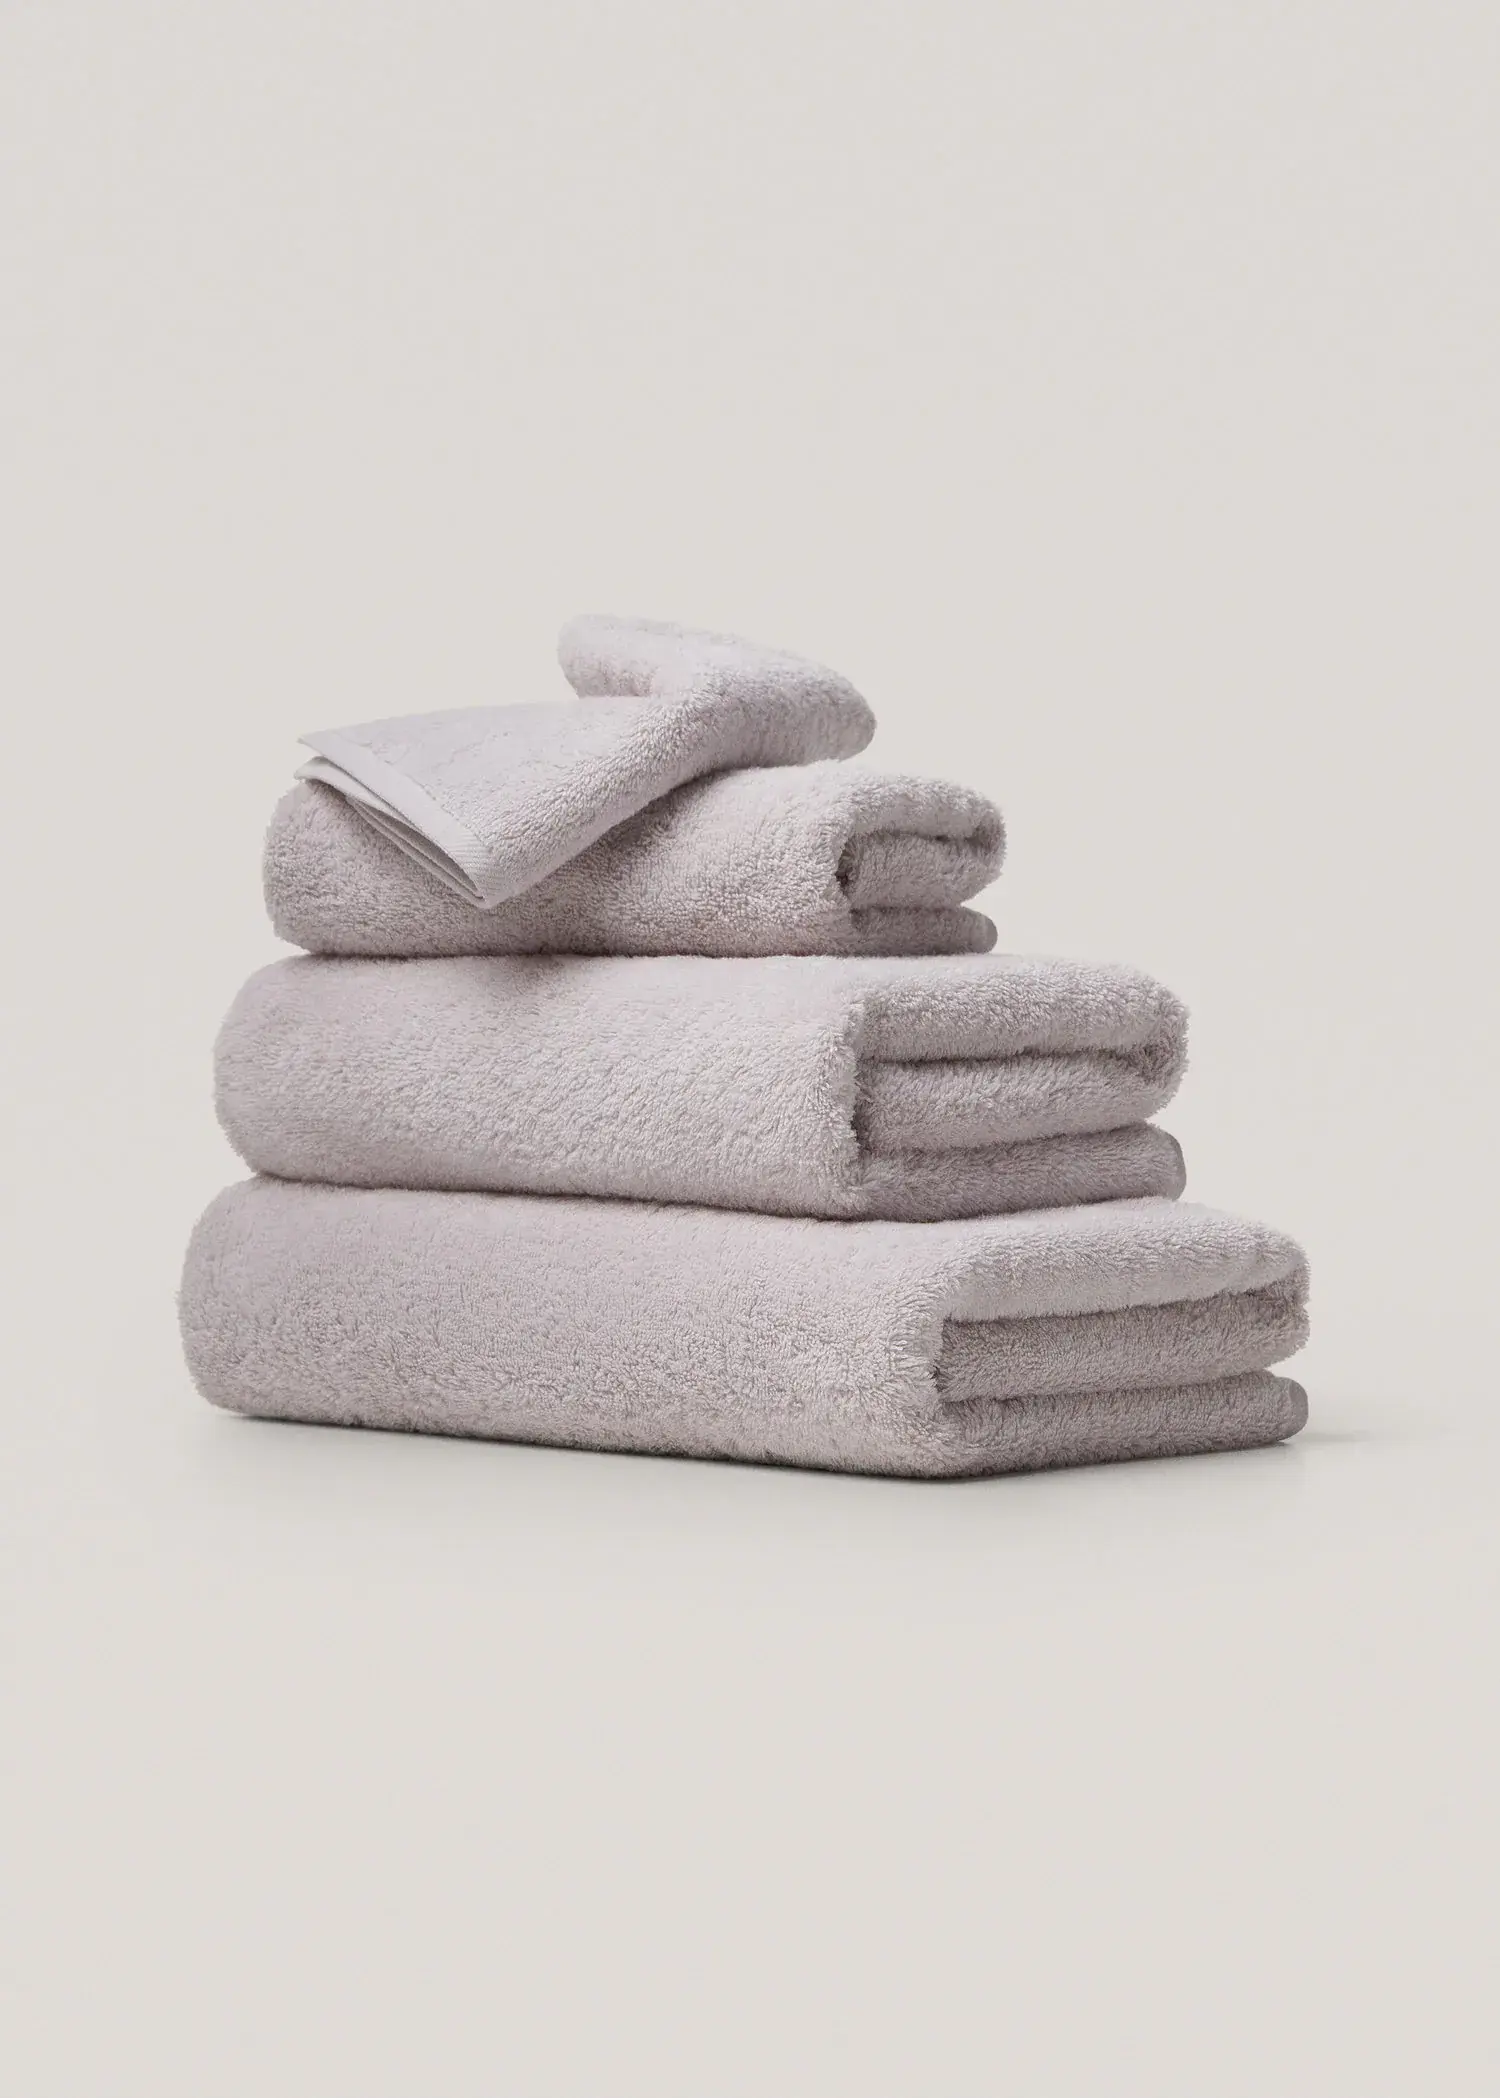 Mango 500gr/m2 cotton bath towel 90x150cm. 1